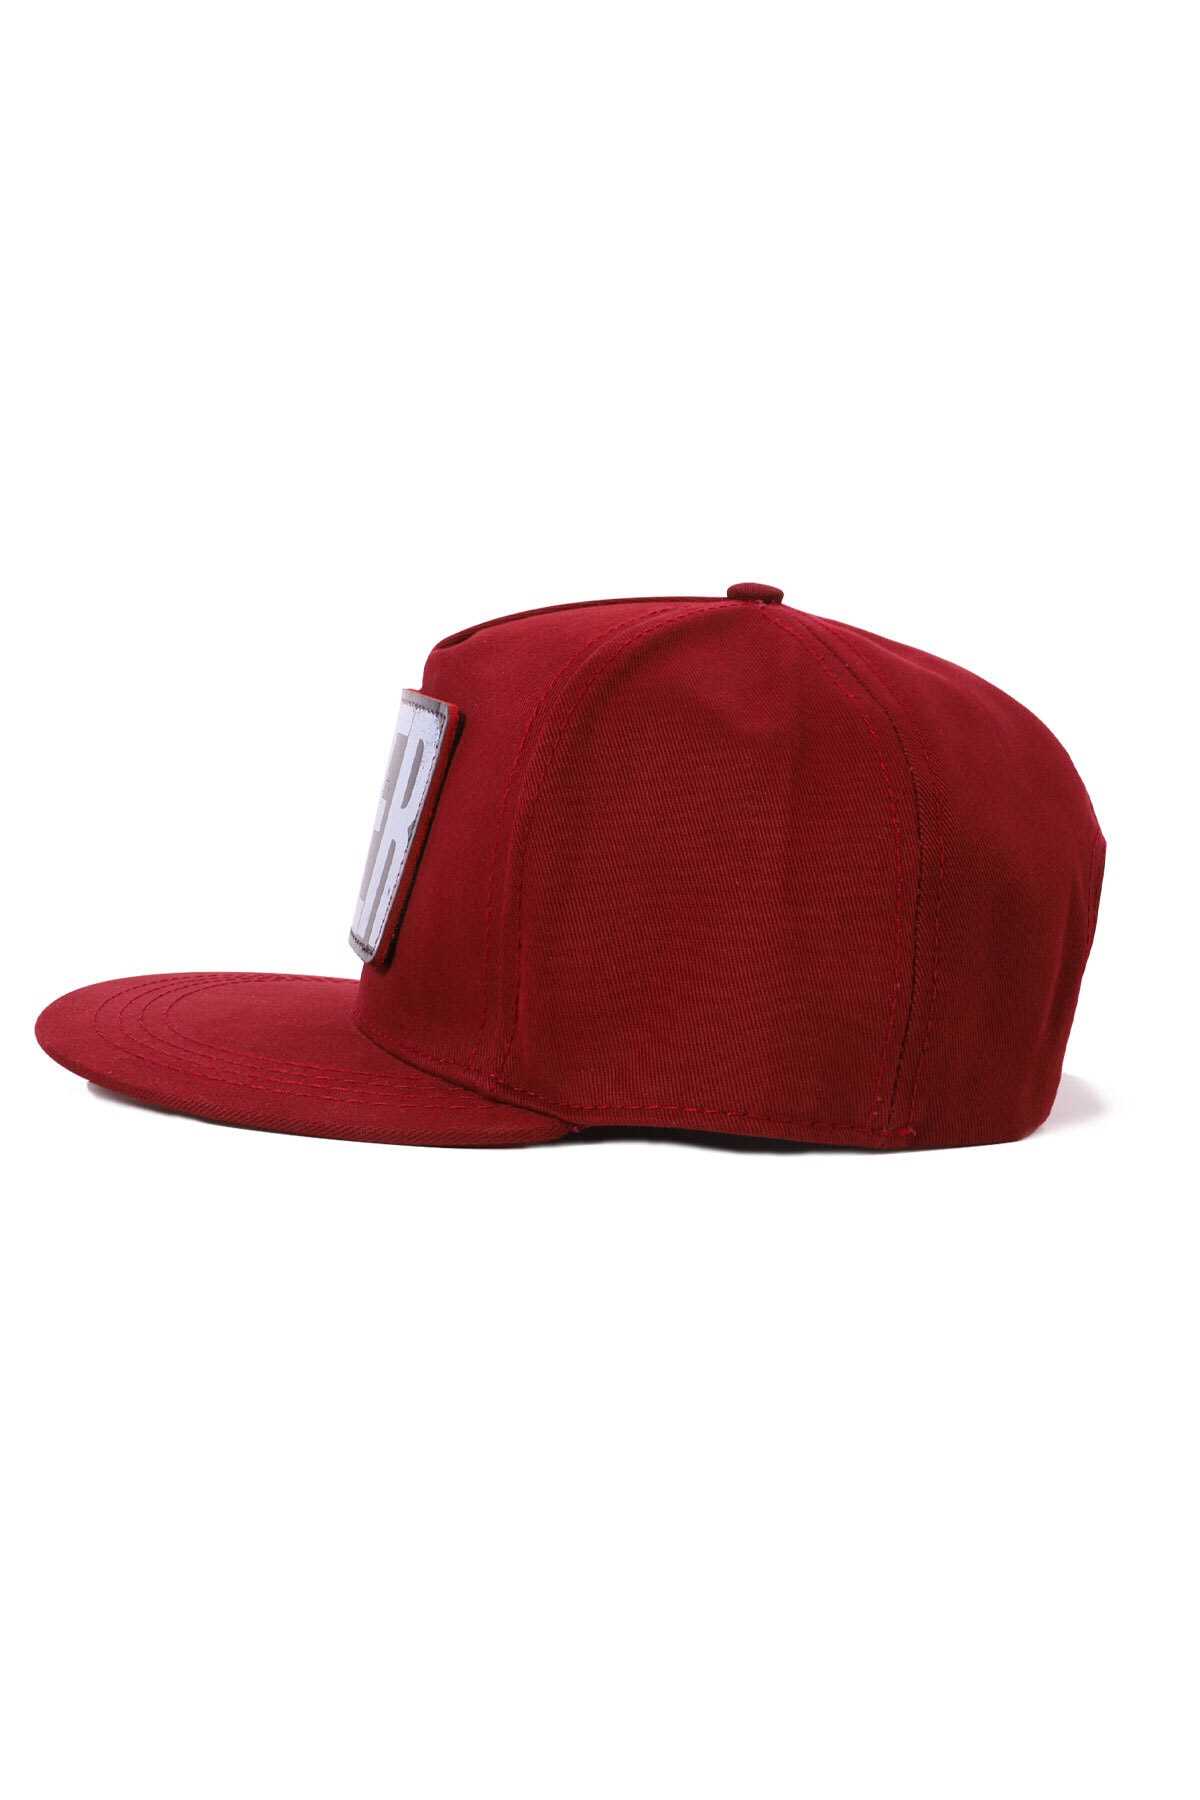 فروش کلاه مردانه جدید شیک LEATHIFY رنگ زرشکی ty218097023